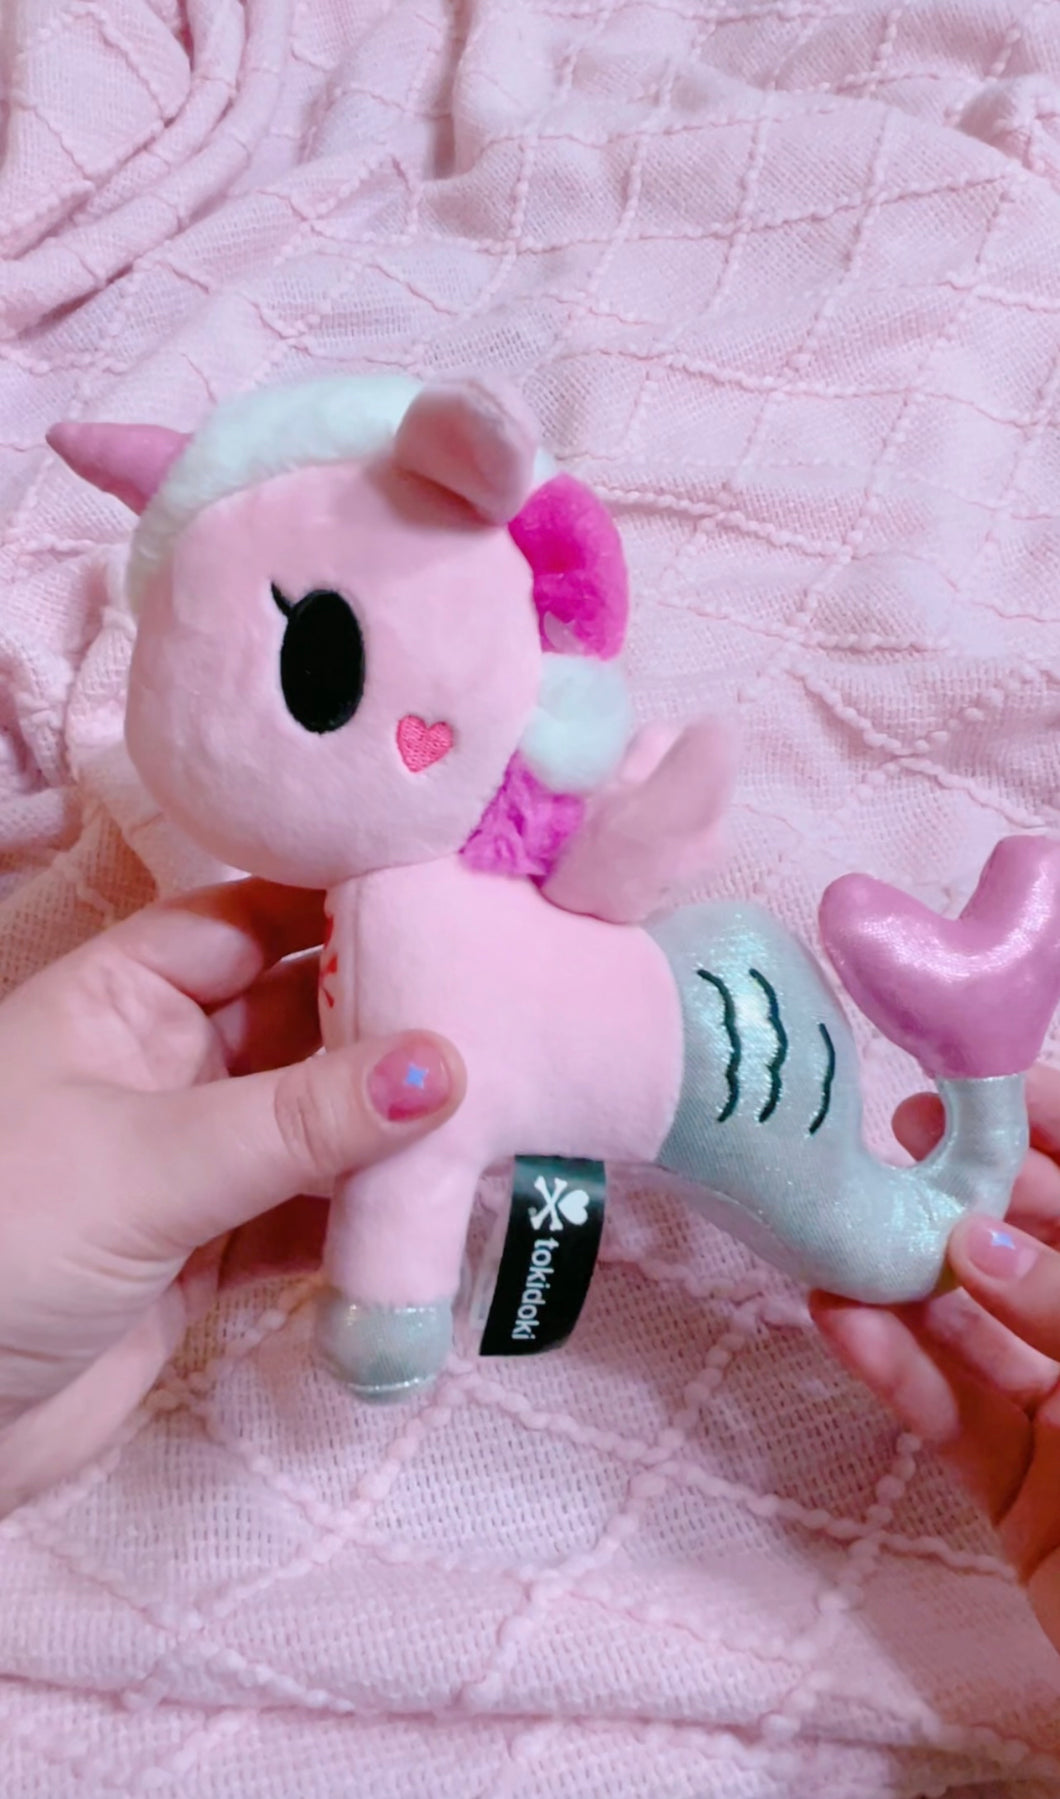 TokiDoki unicorn mermaid plush toy - 7.5” tall